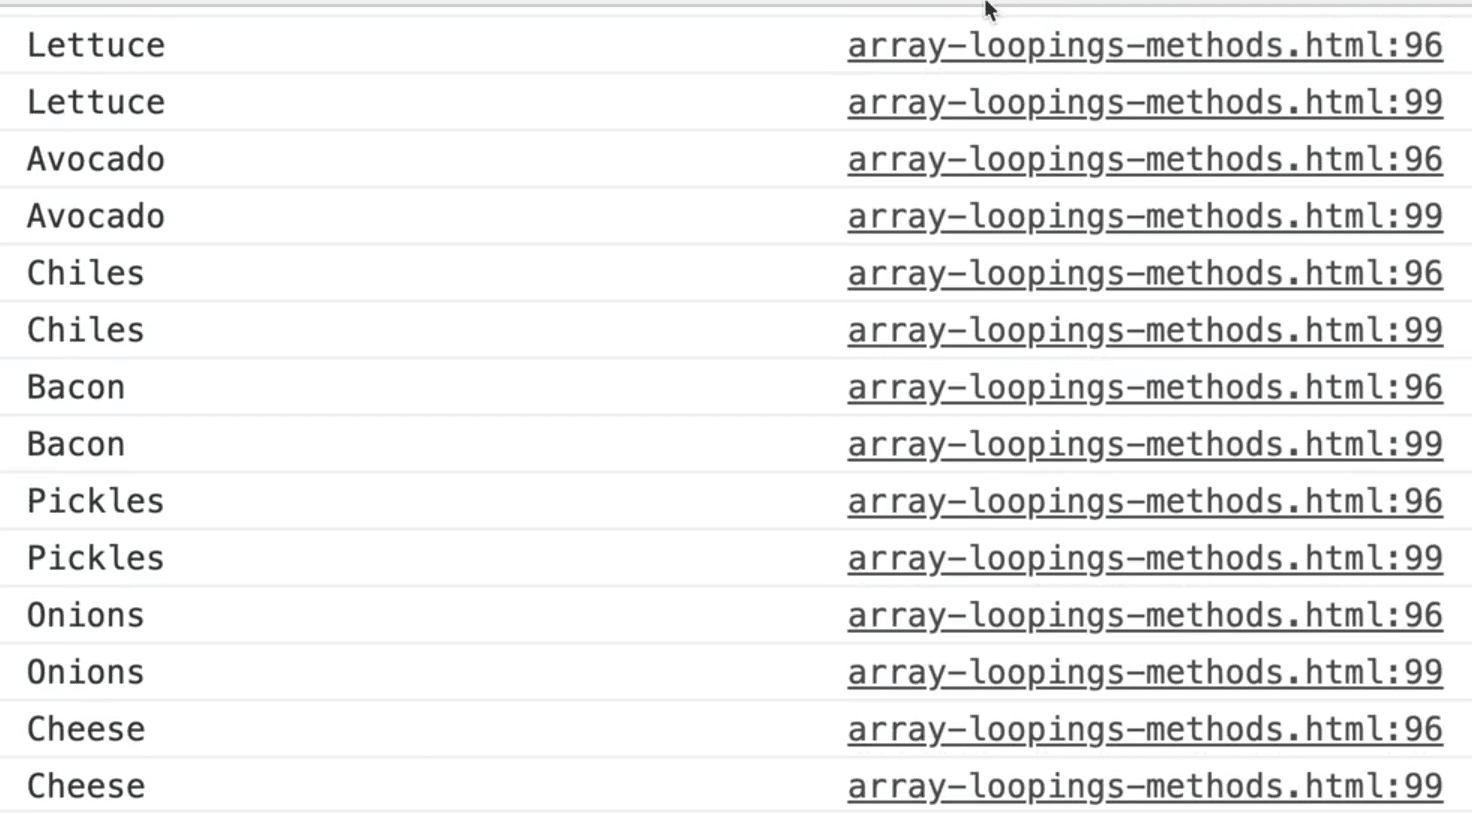 adding a log of originalArray[index] + 1 to access current looping value via index